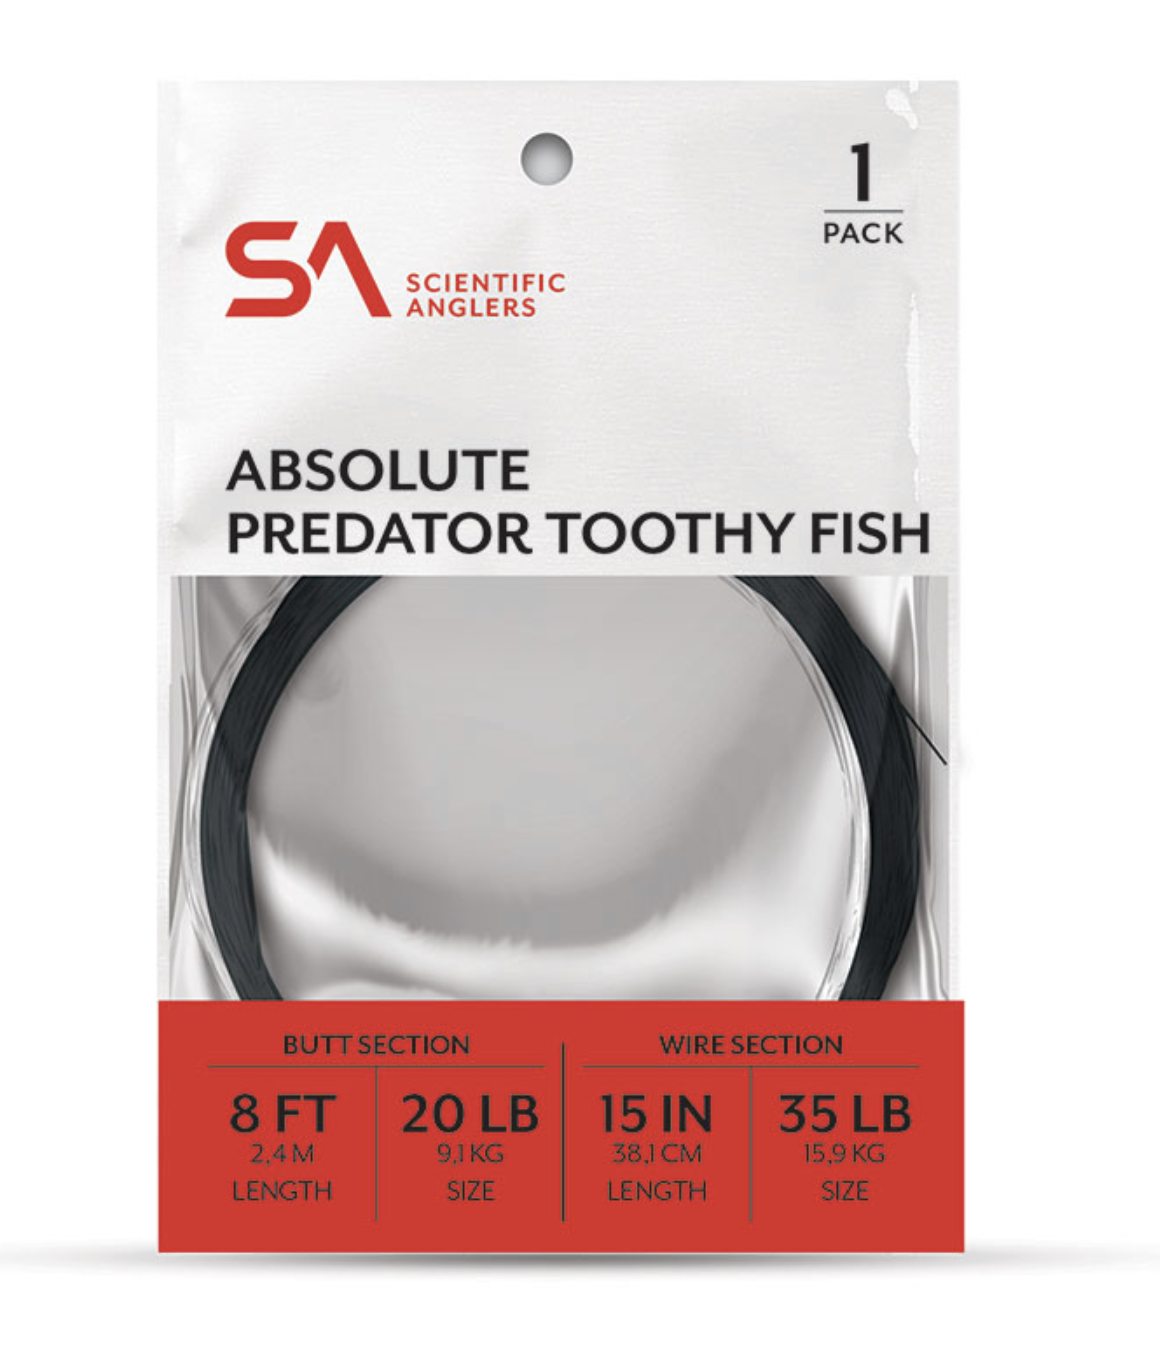 3M Scientifc Anglers Absolute Predator Toothy Fish